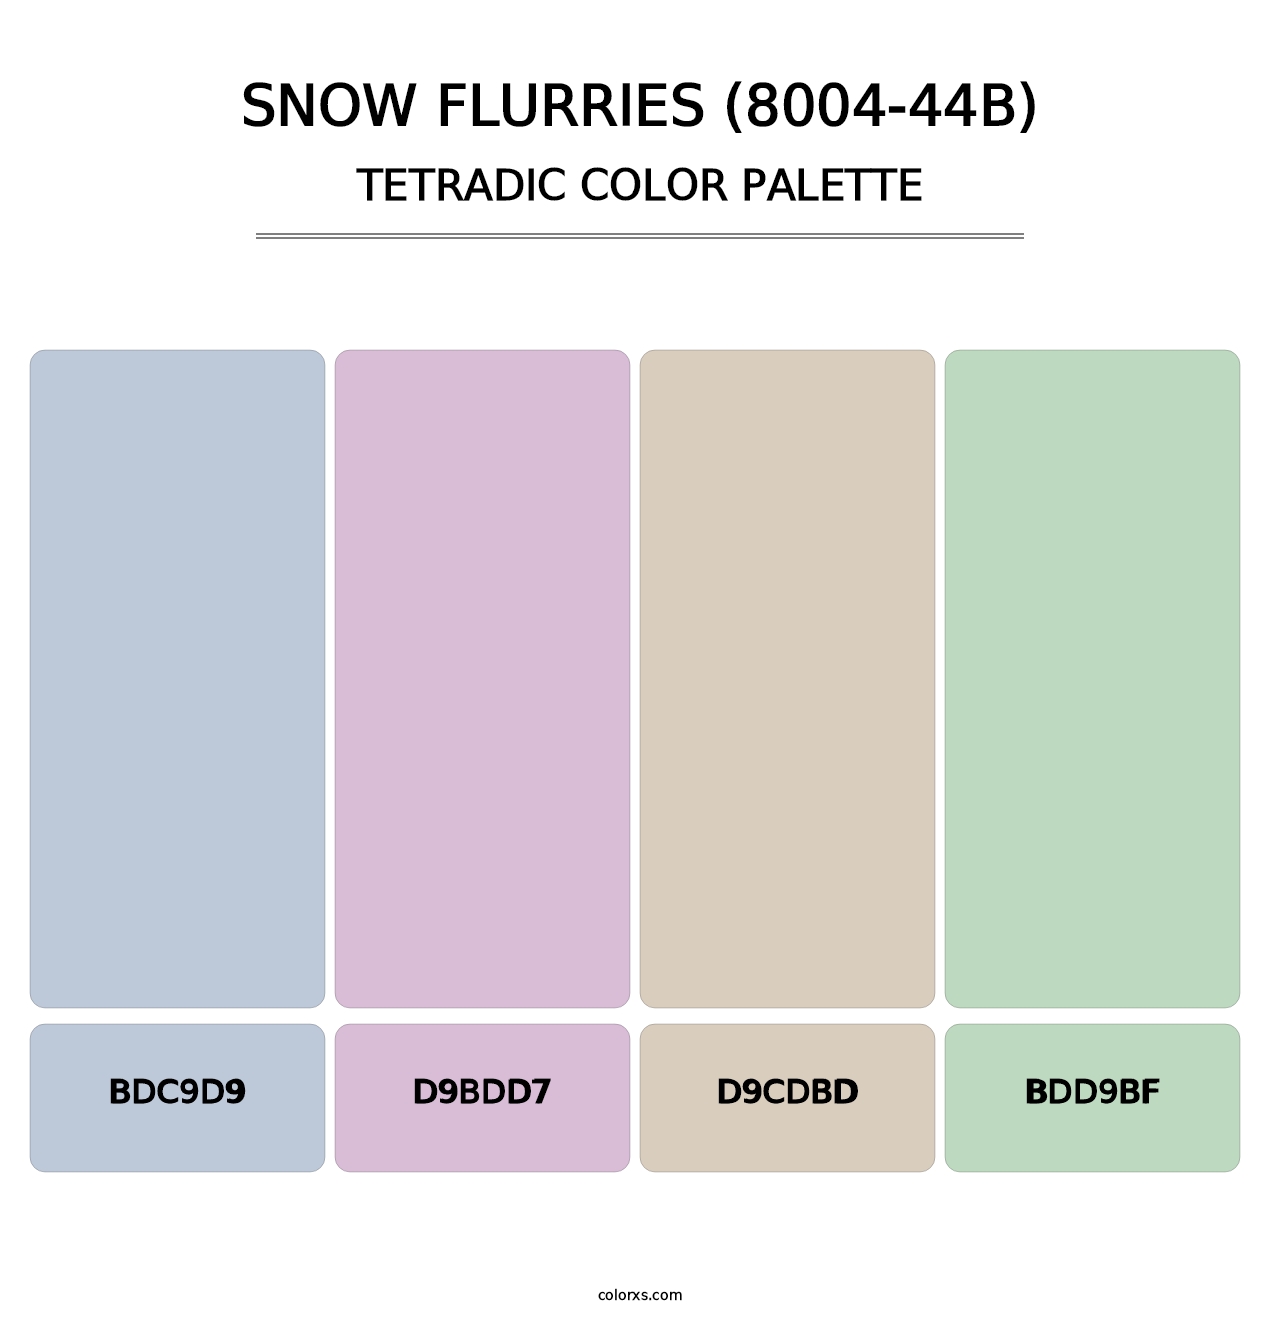 Snow Flurries (8004-44B) - Tetradic Color Palette